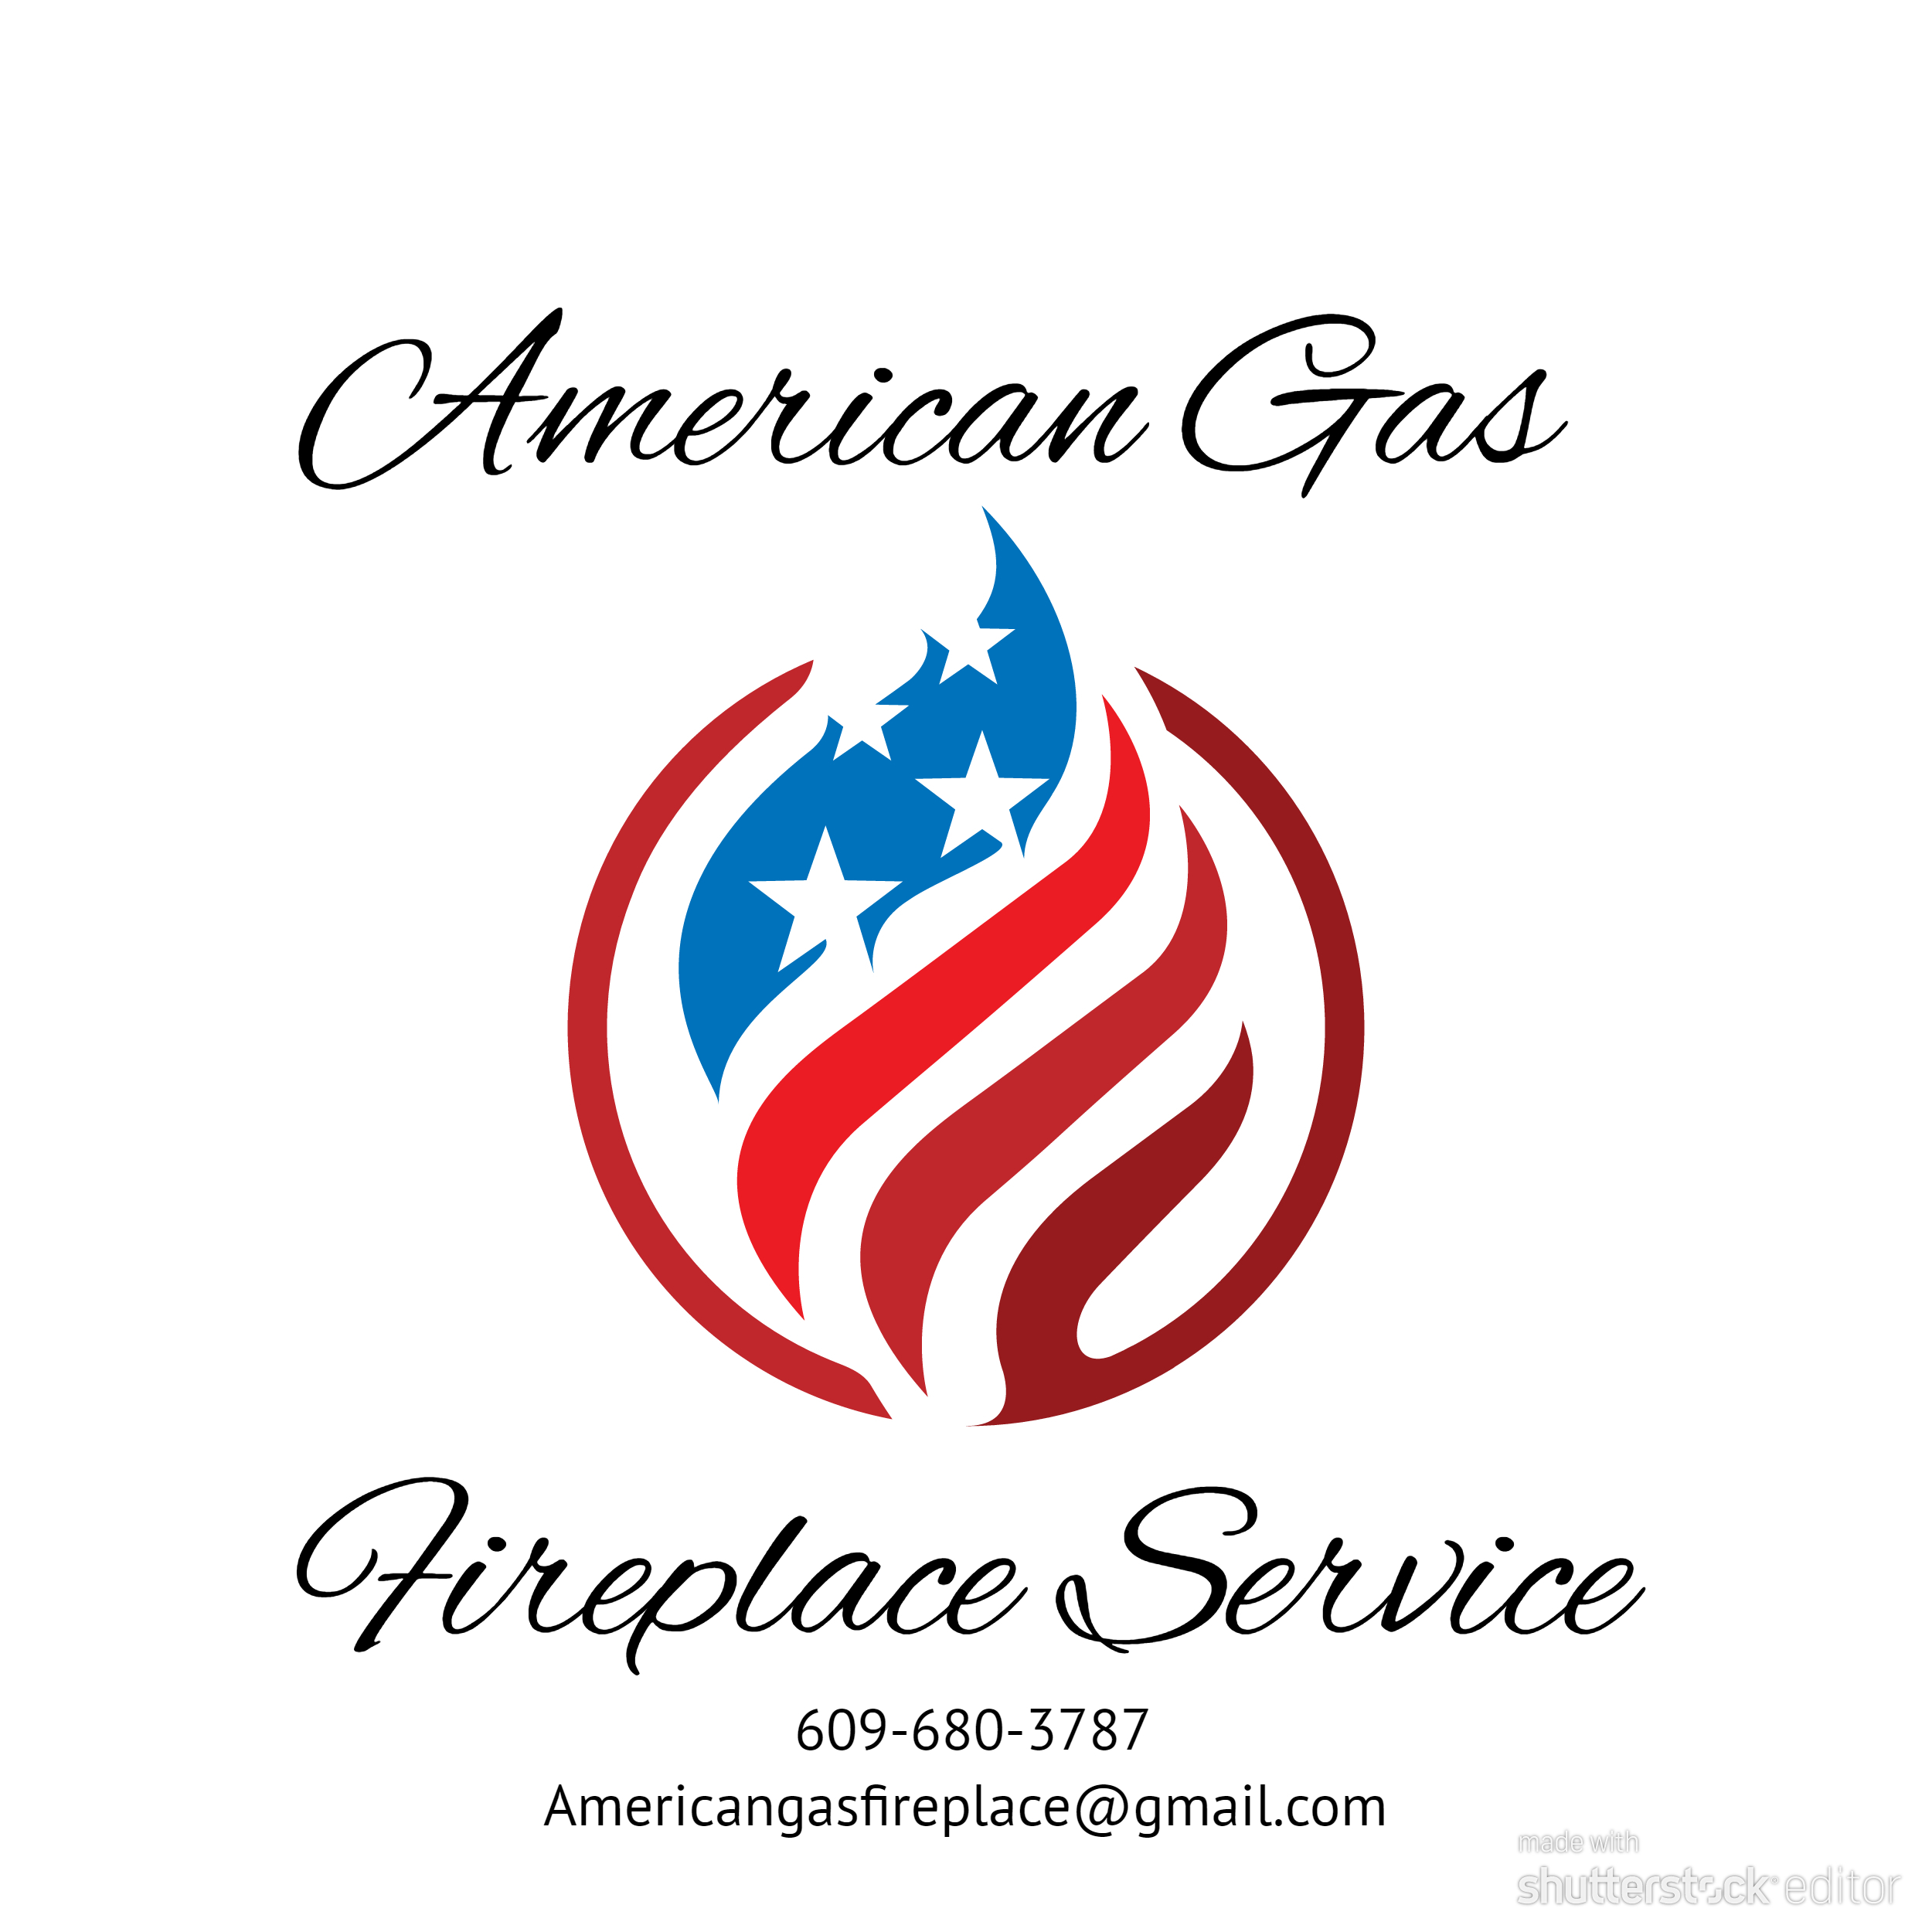 American Gas Fireplace Service Logo